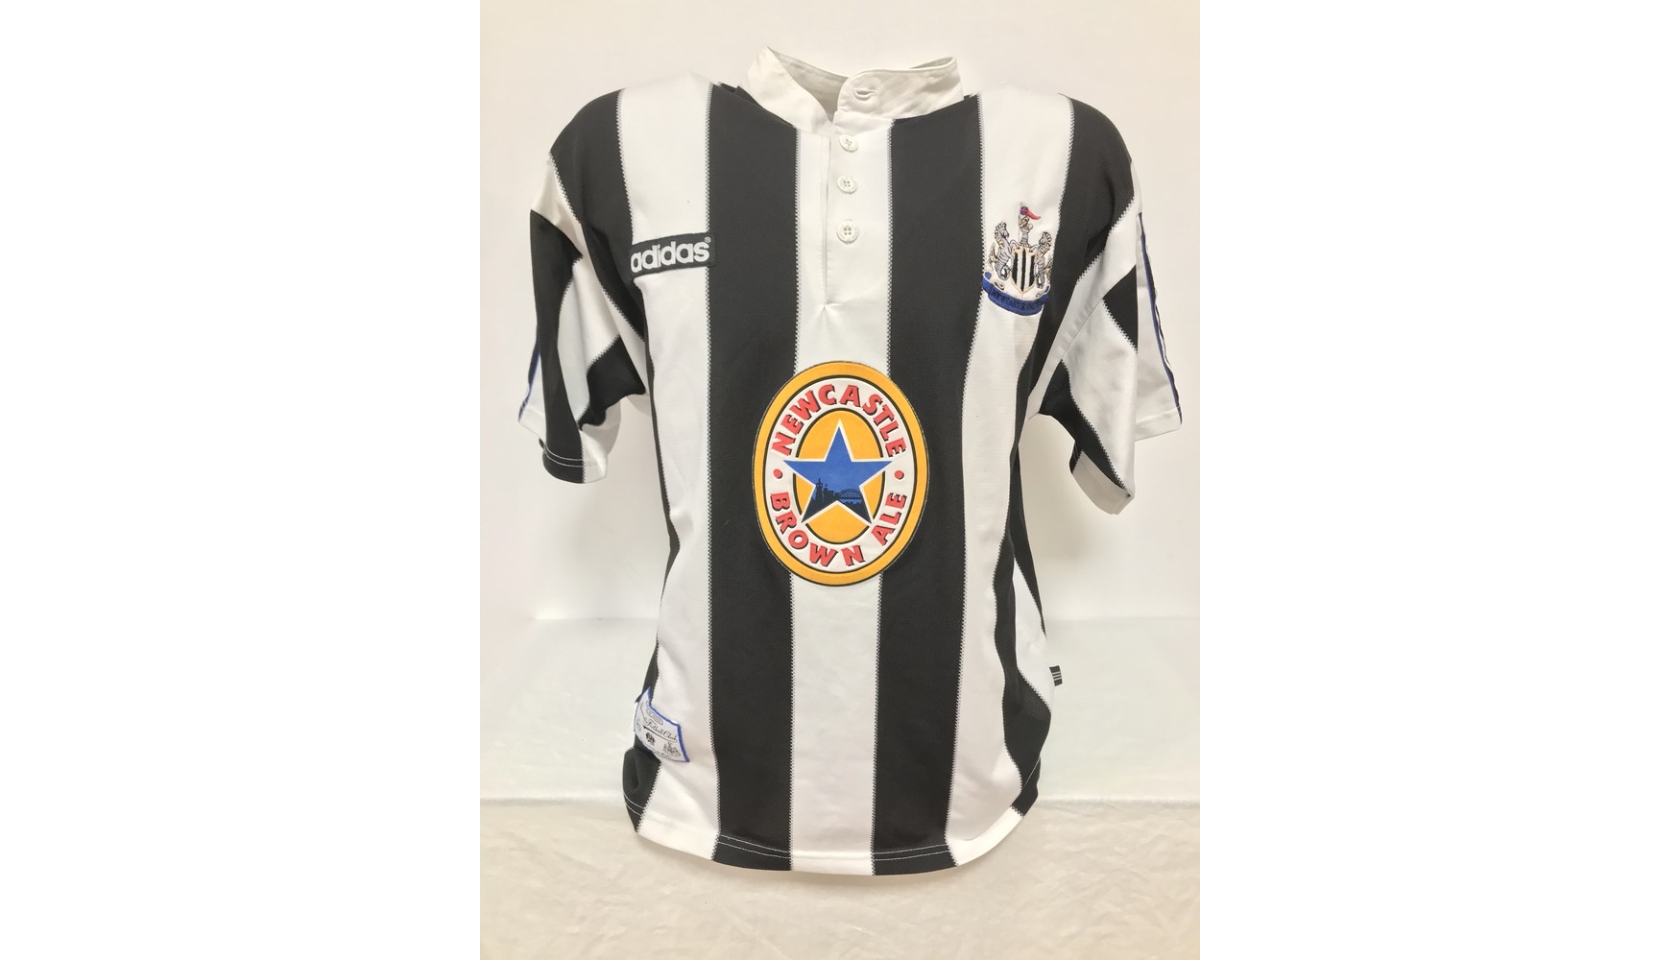 Shearer Official Newcastle Shirt, 1997/98 - CharityStars